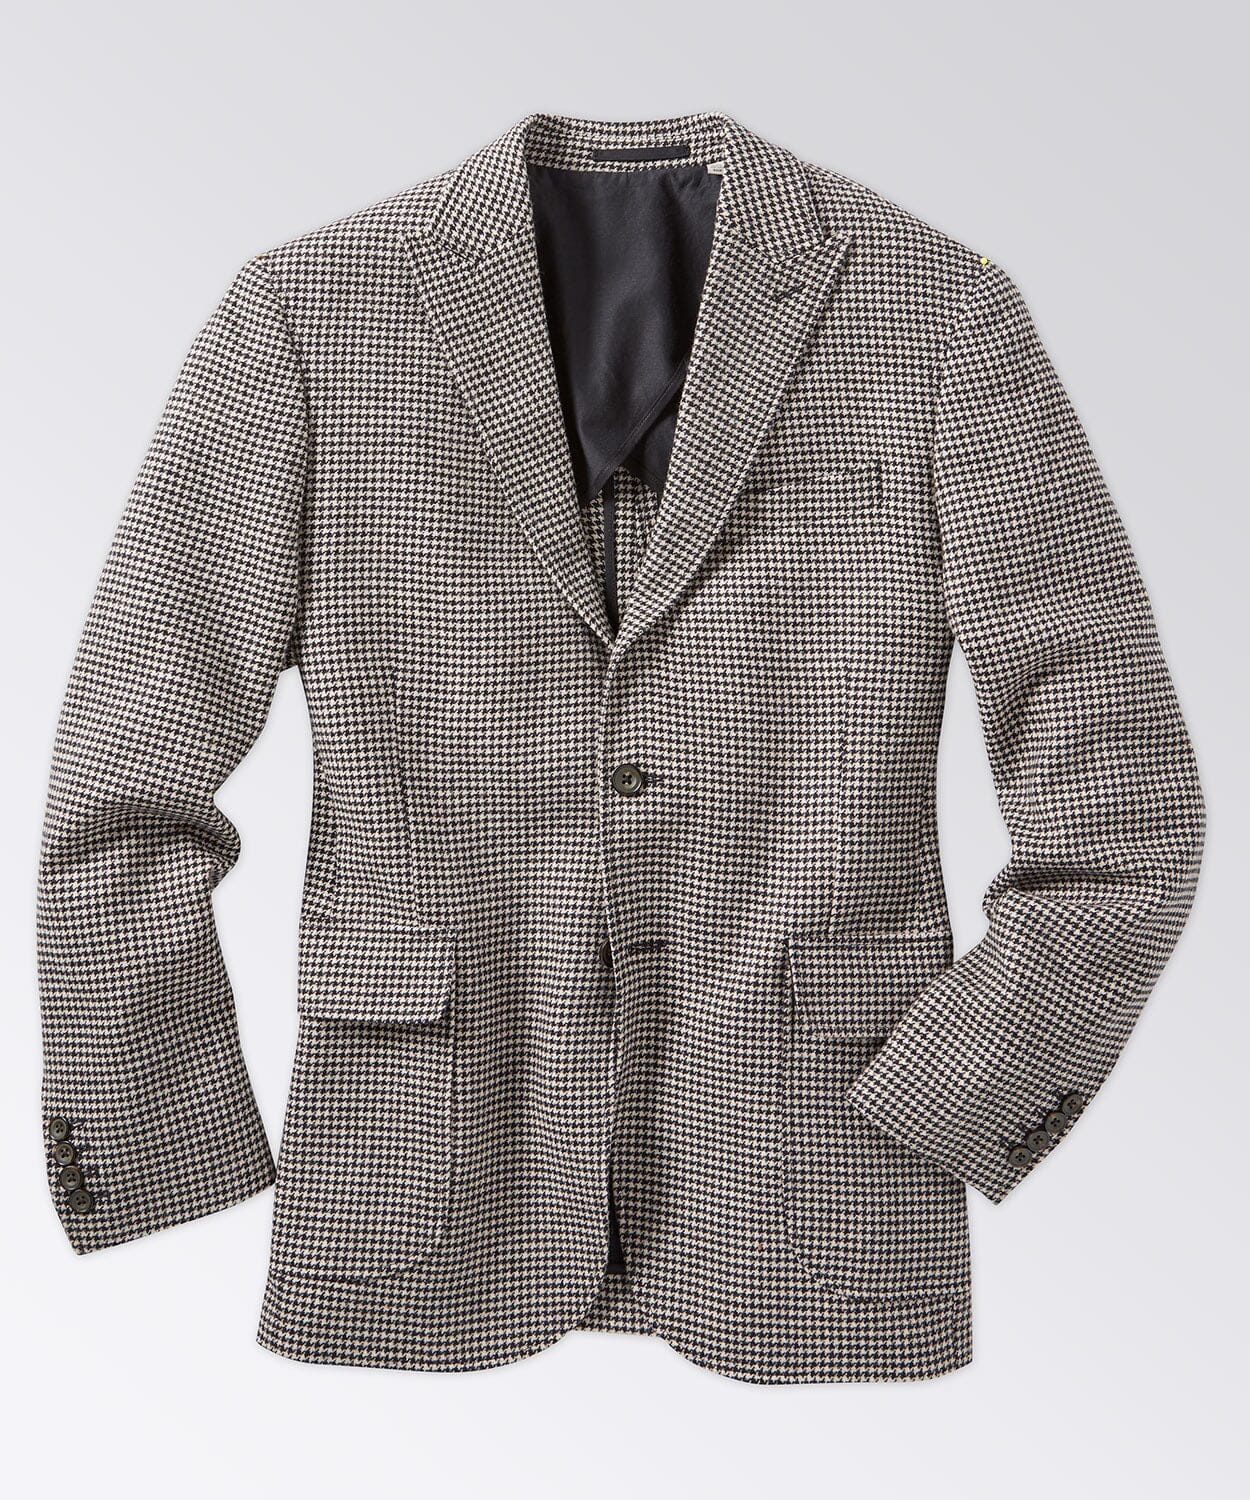 Buy Men's Readymade Formal Jackets / Blazers Online, India @ Tailorman